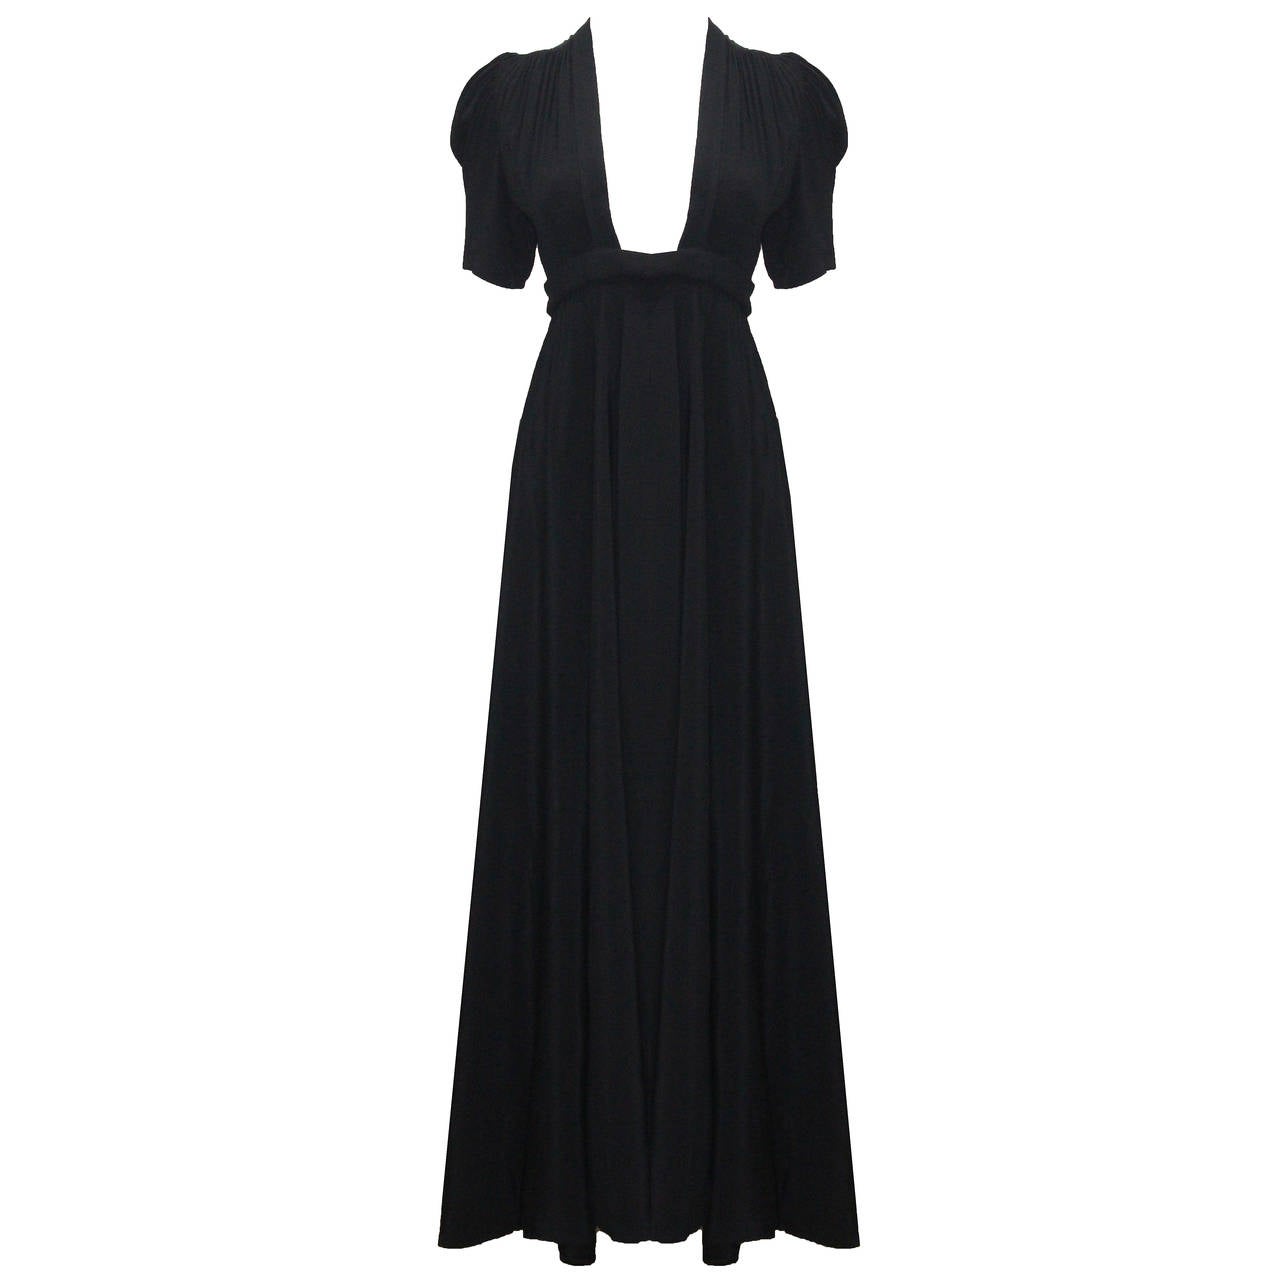 The 1960s Bridget Bardot Low Plunge Wrap Dress by Ossie Clark for ...